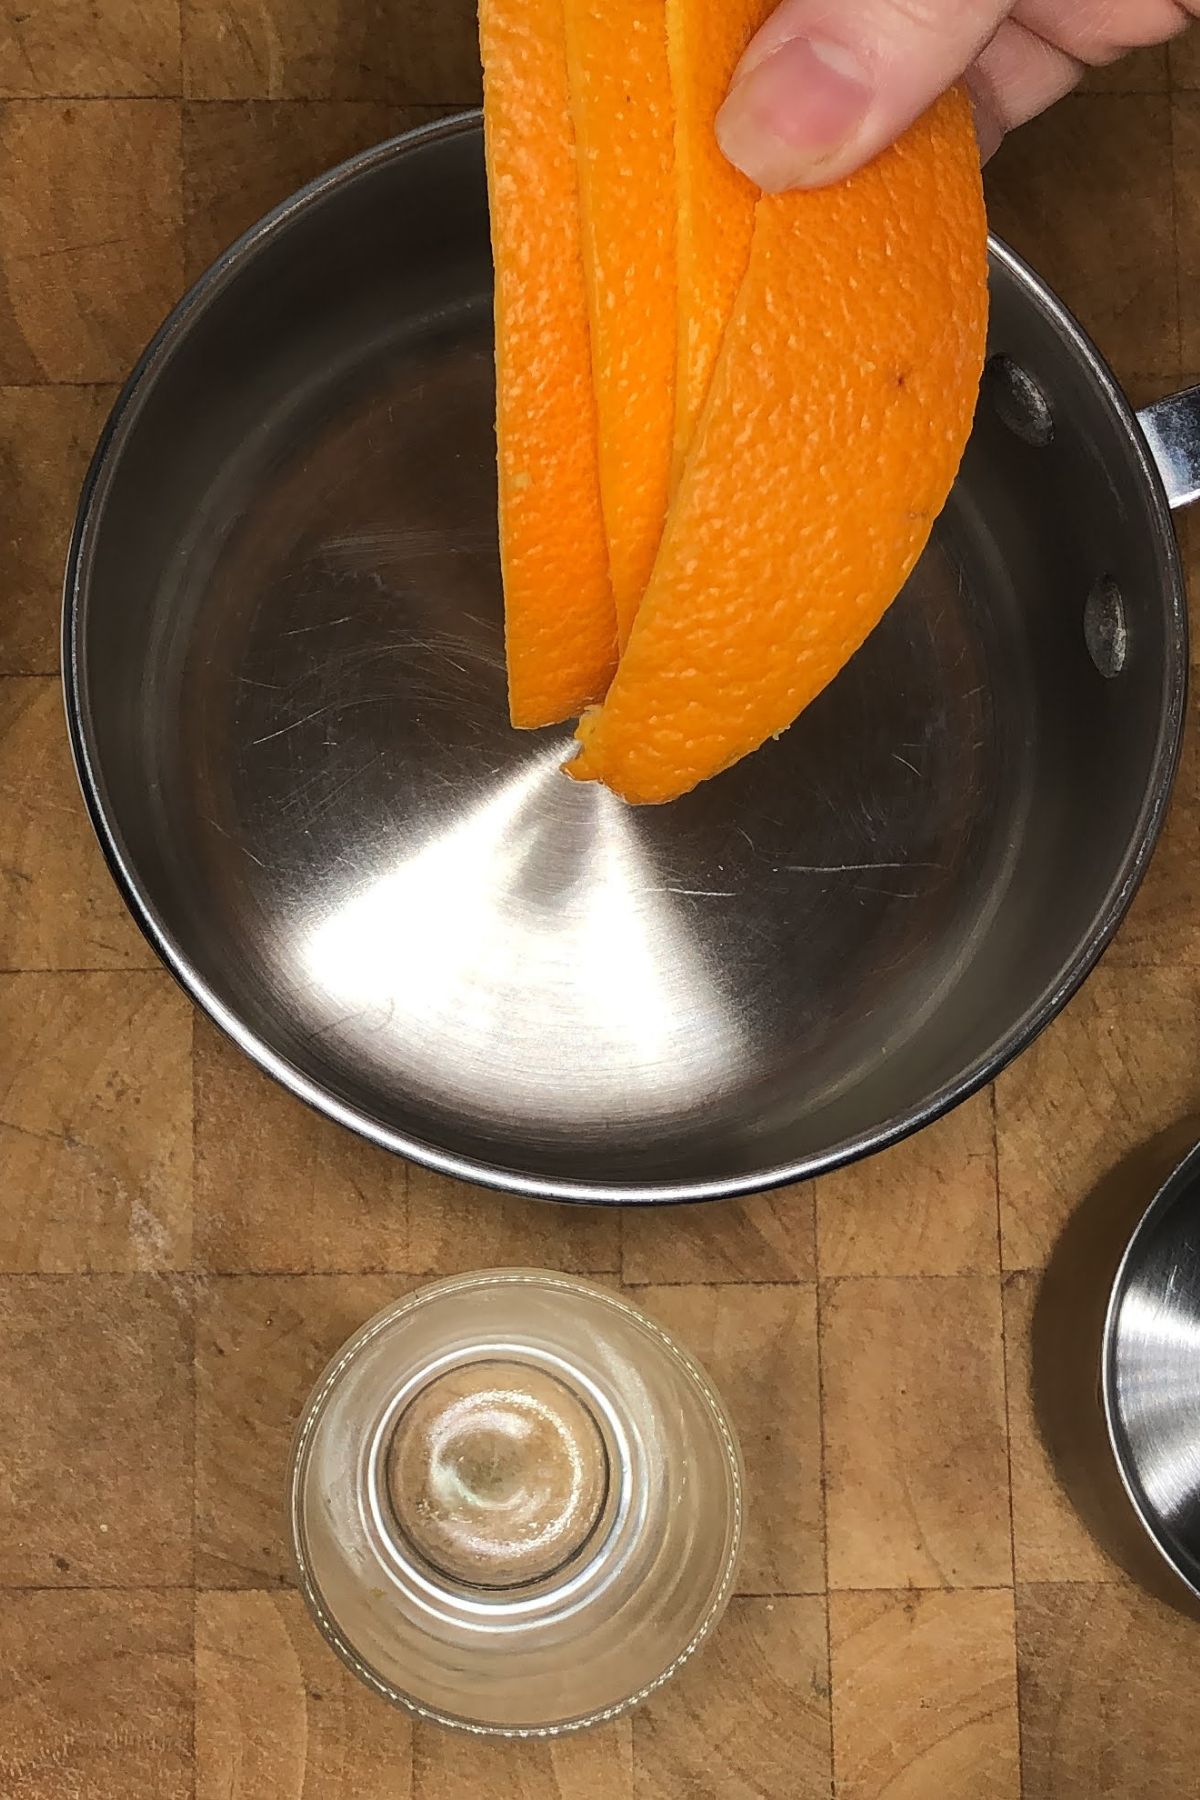 Adding three orange peels into a pot.